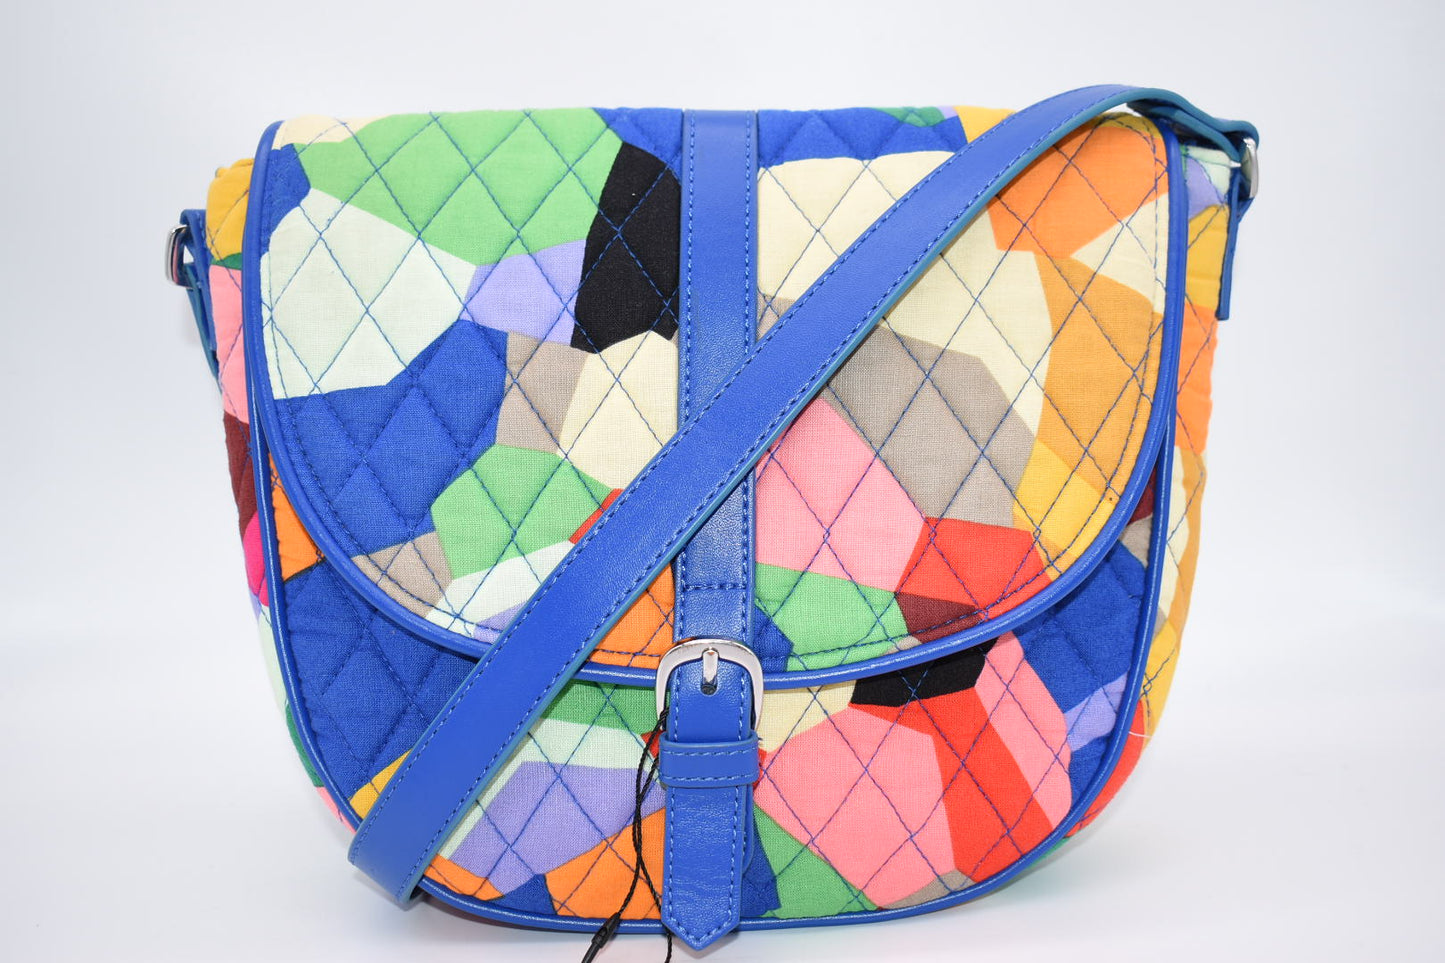 Vera Bradley Slim Saddle Bag in "Pop Art" Pattern